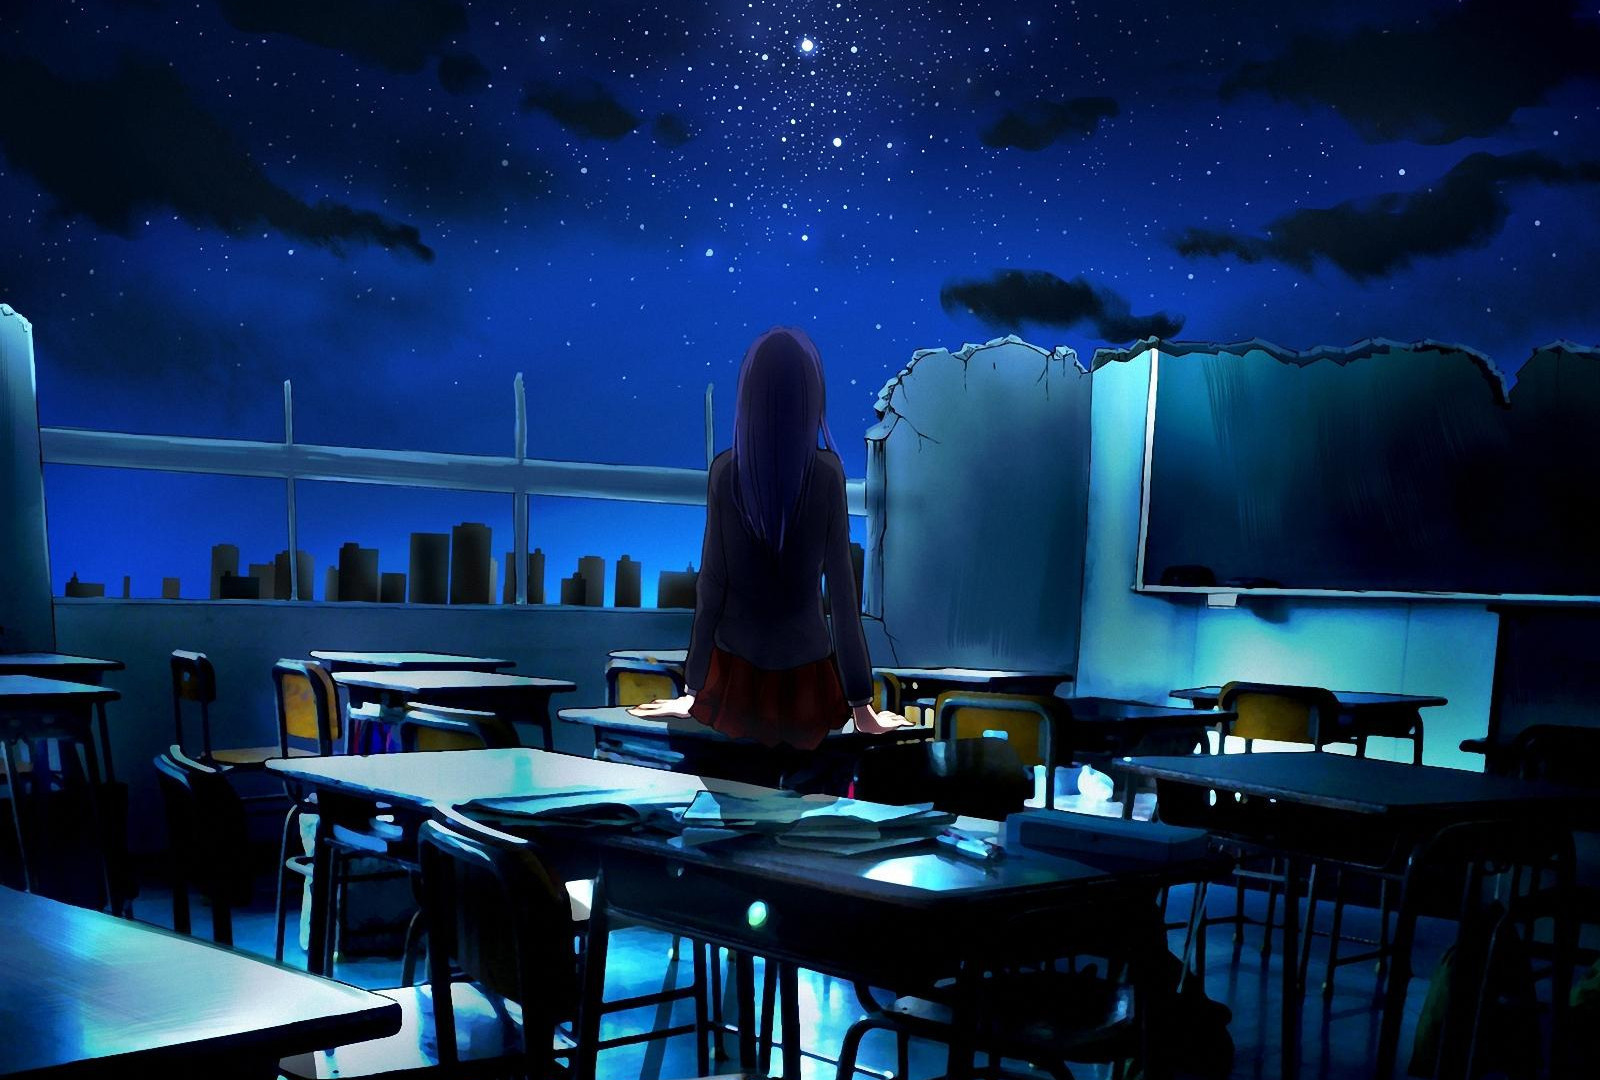 Download wallpaper 1600x1200 open, classroom, anime girl, night, original,  standard 4:3 fullscreen 1600x1200 hd background, 8801